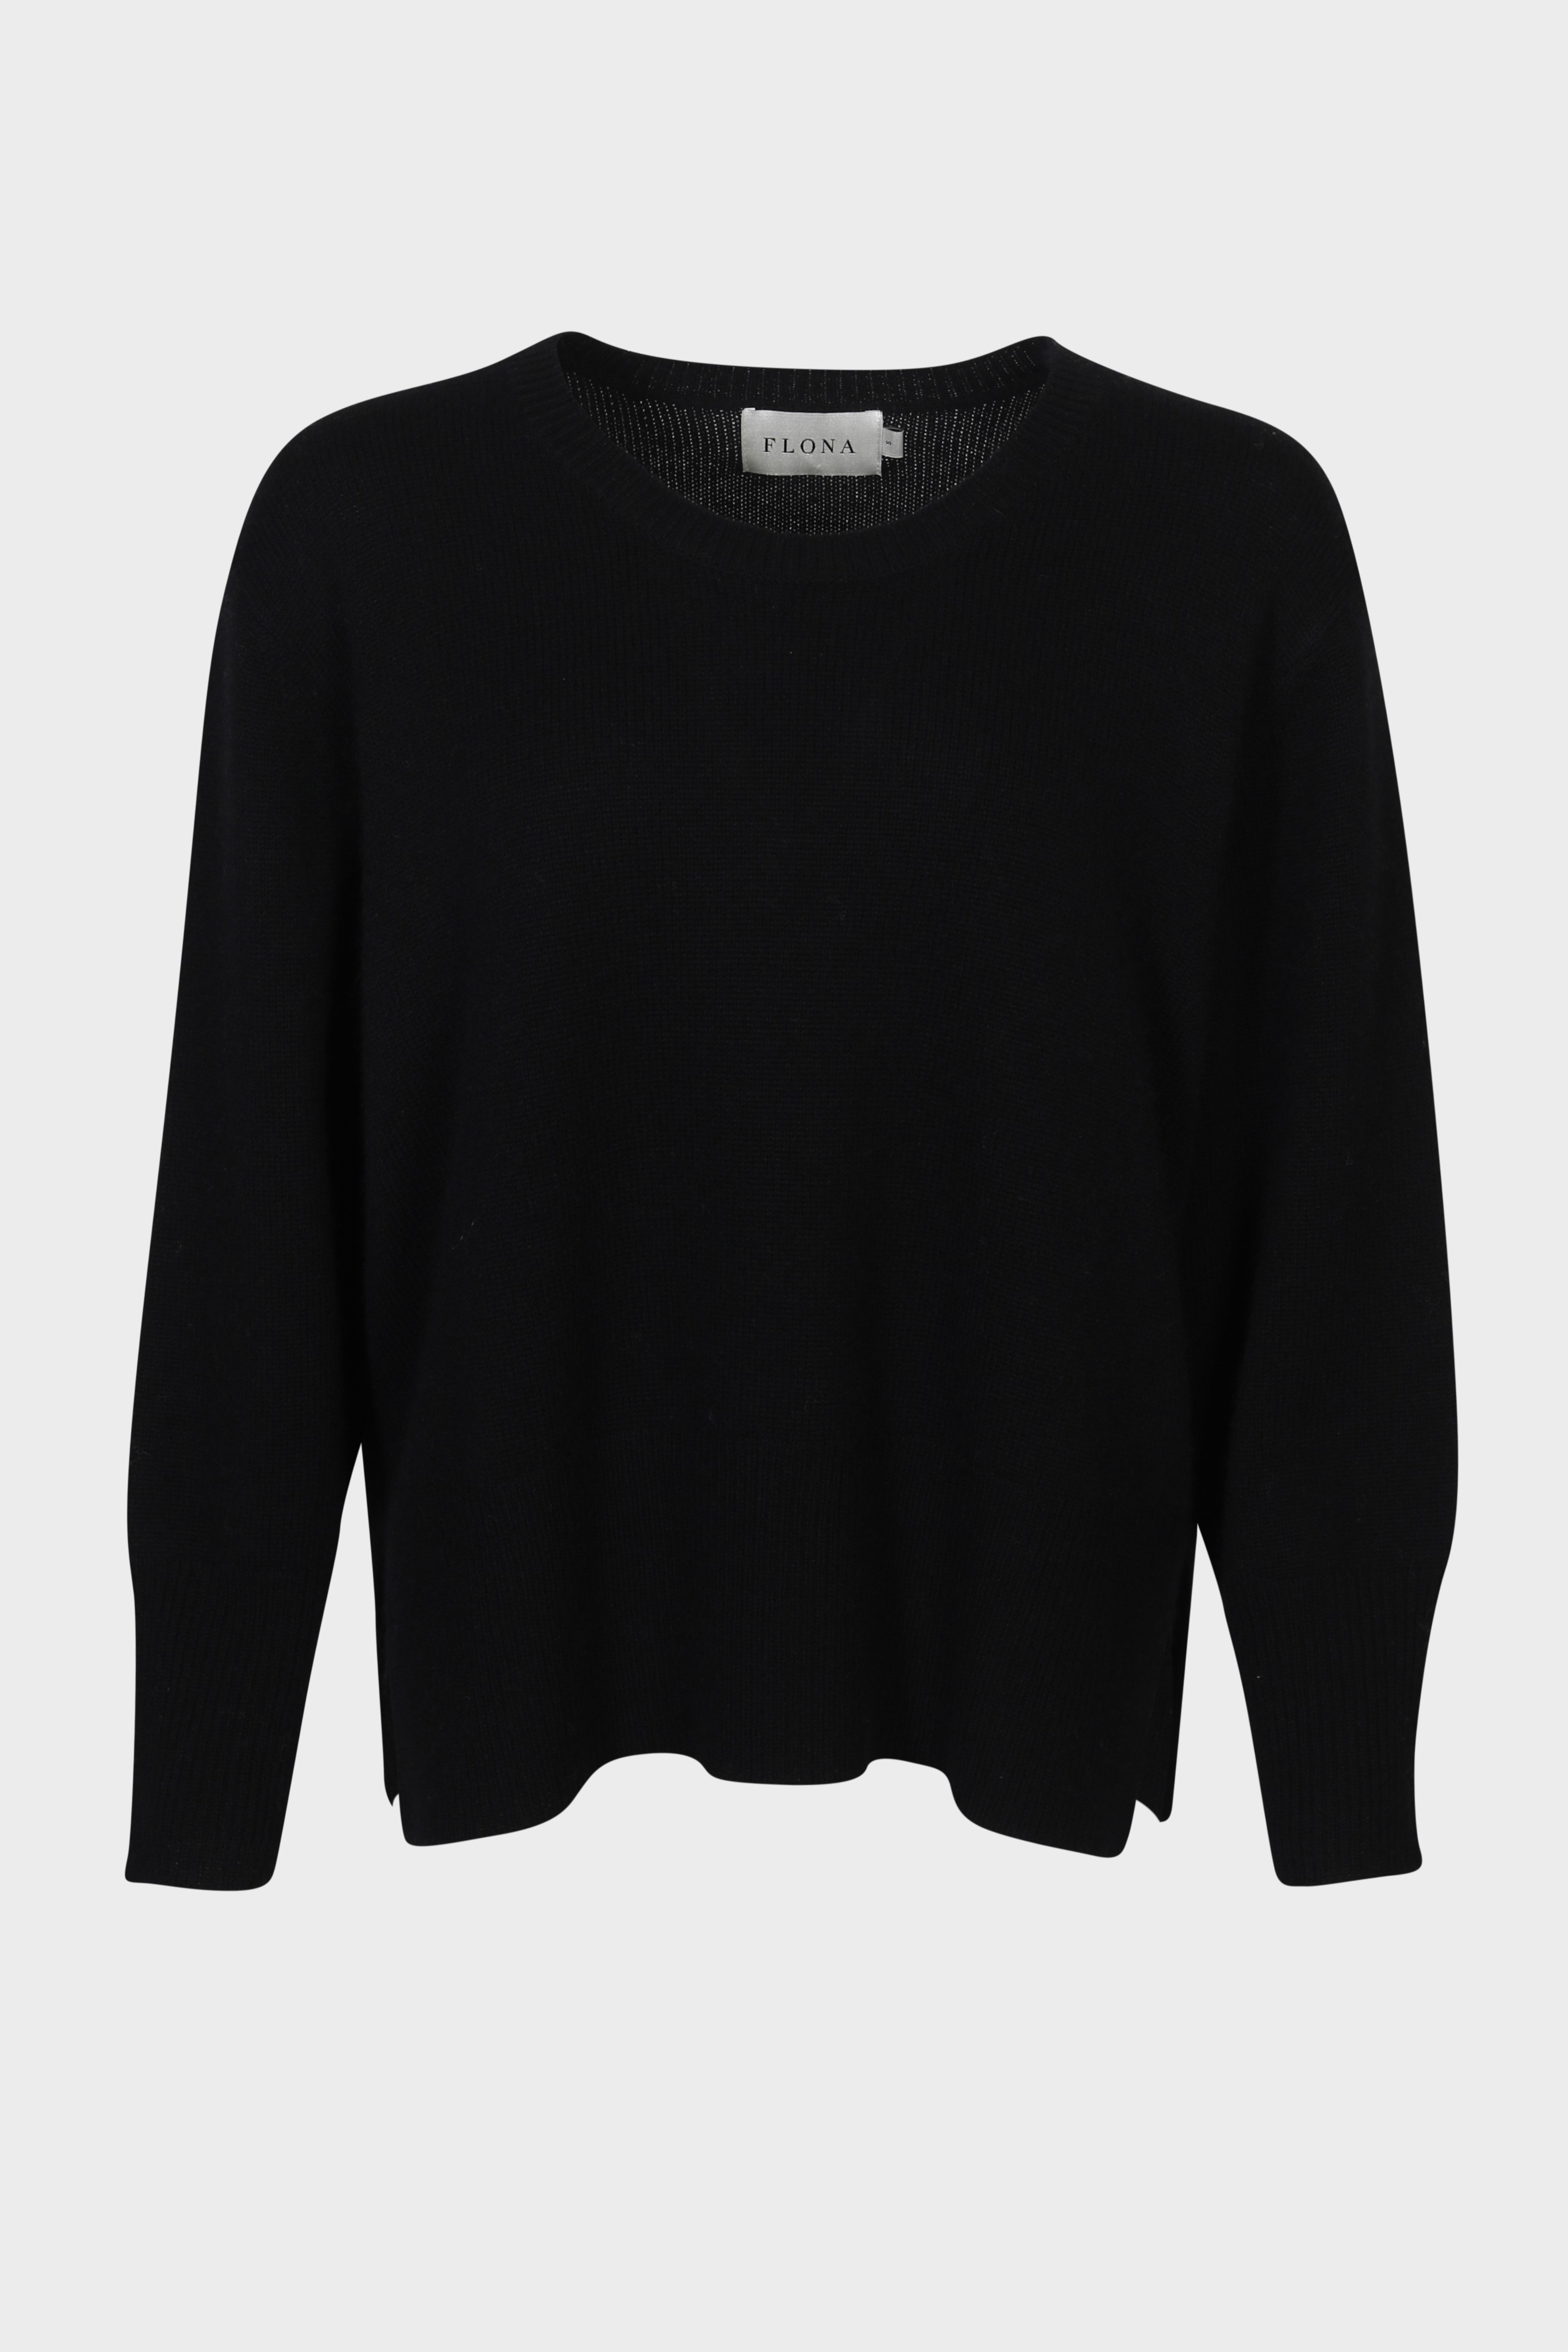 FLONA Cashmere Sweater in Black M